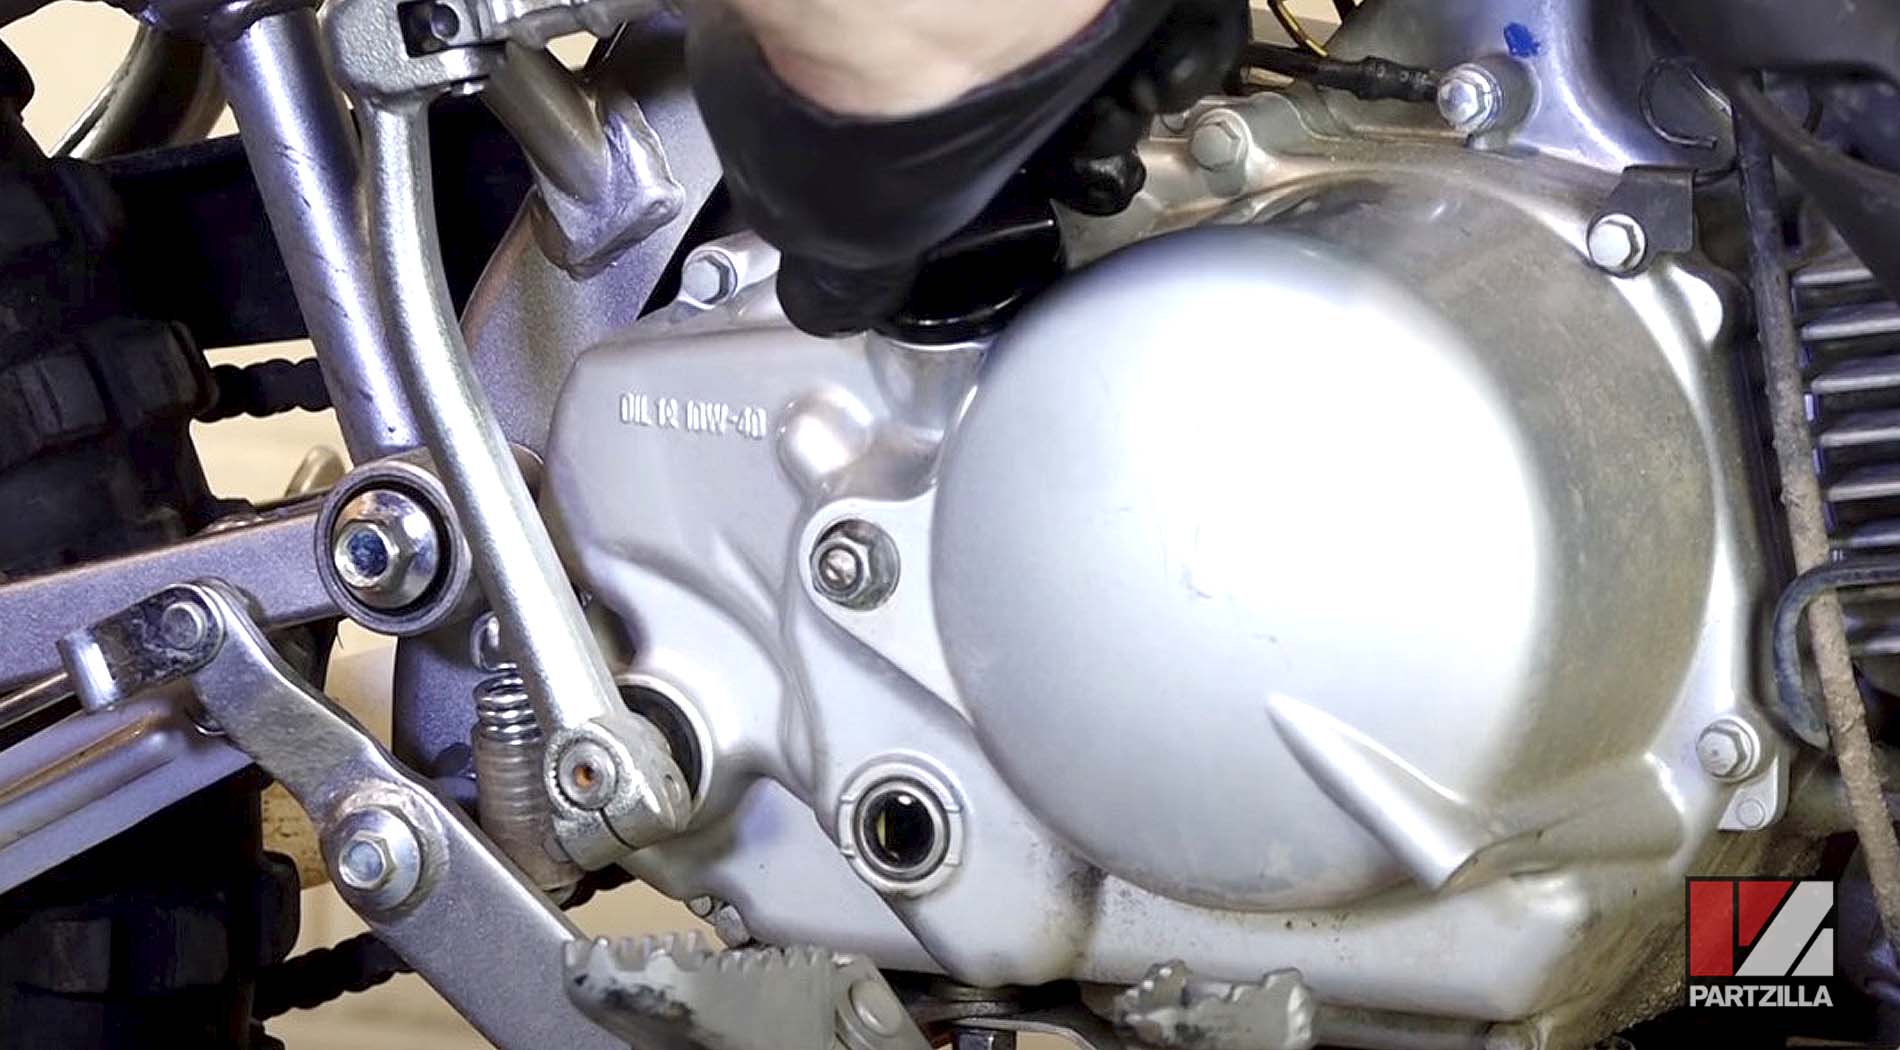 How to change Kawasaki KLX 110 dirt bike oil